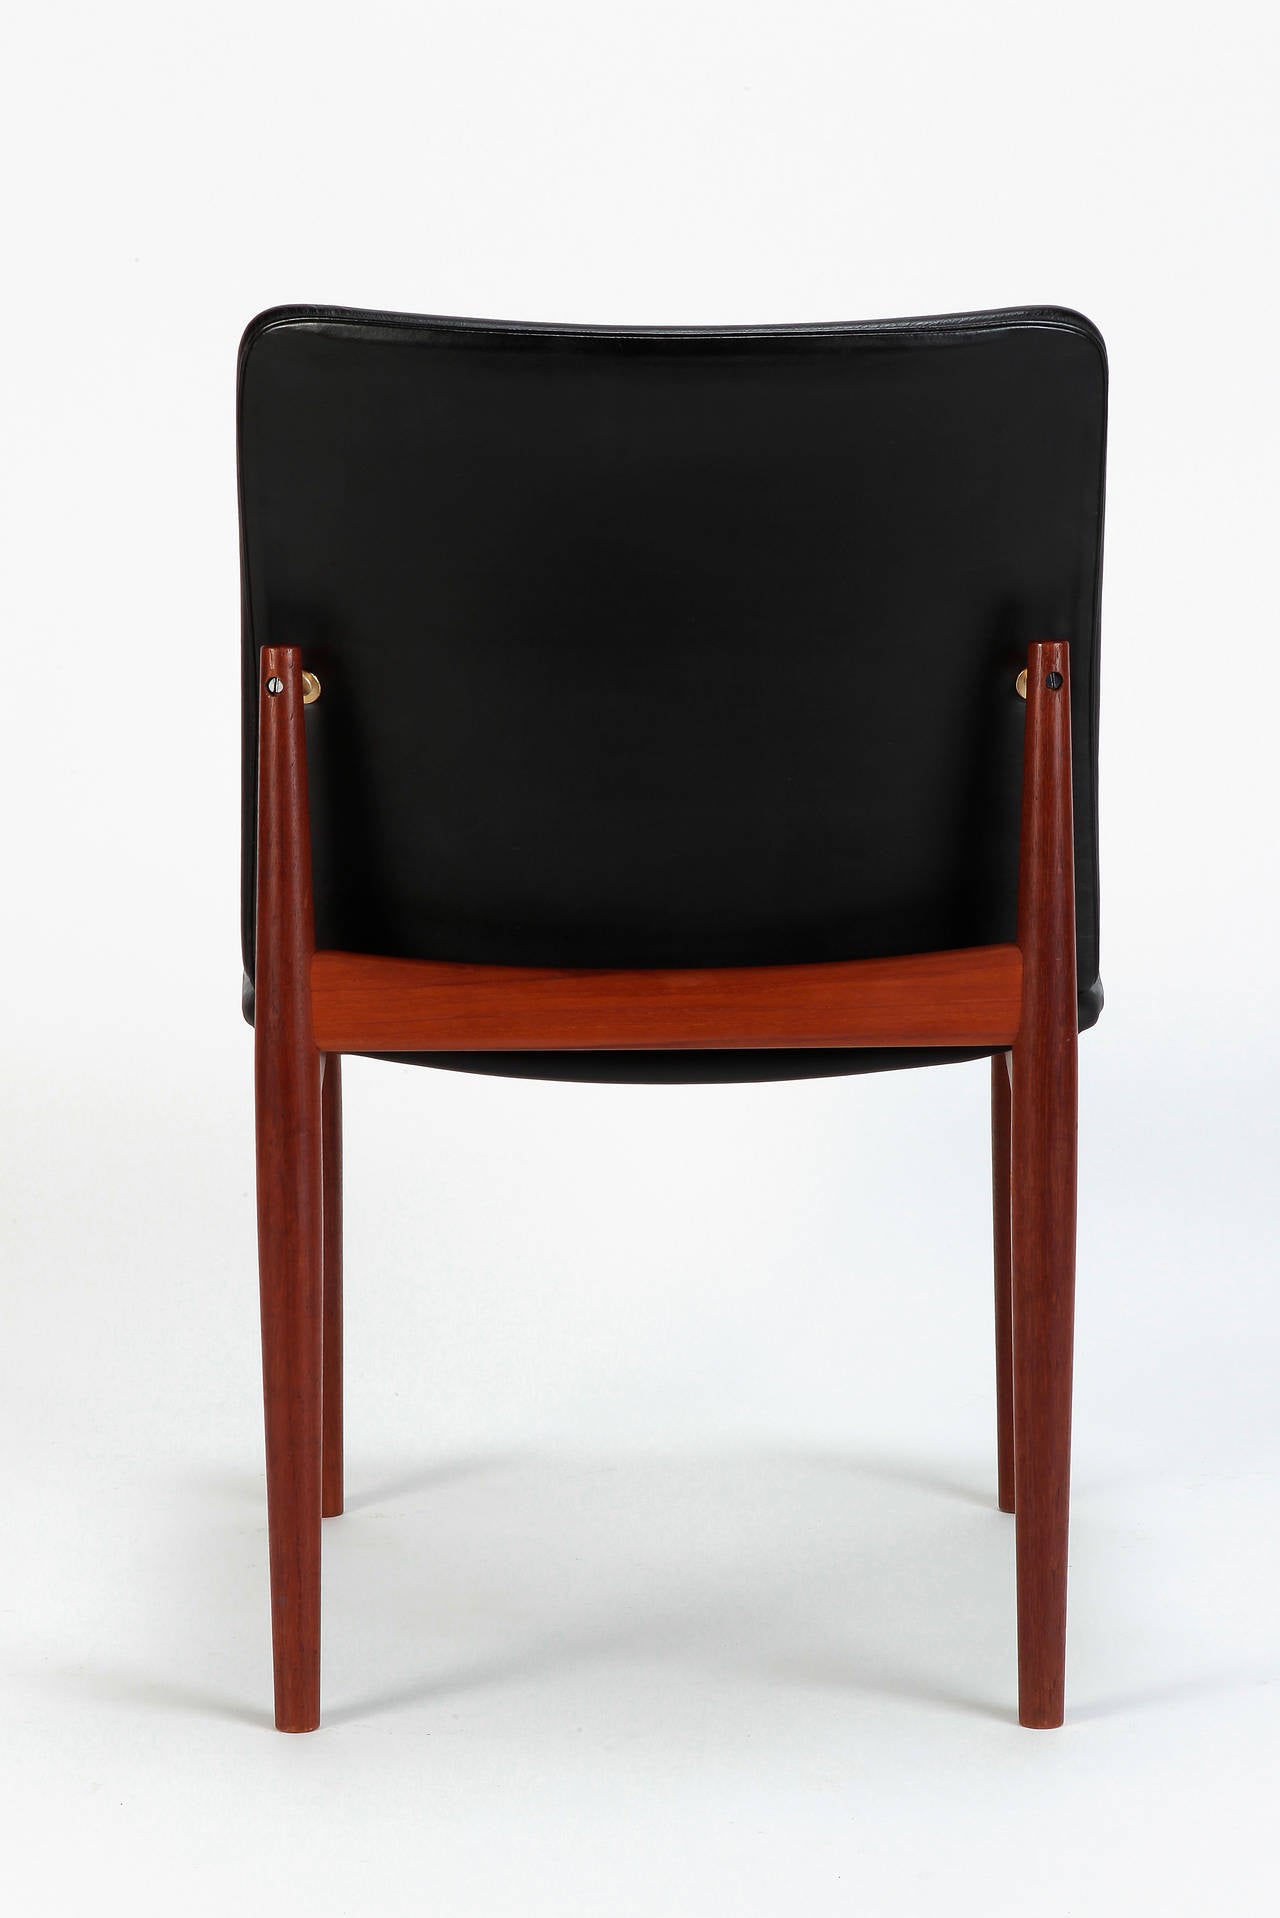 Mid-20th Century Danish Teak Leather Chair Model 191 by Finn Juhl